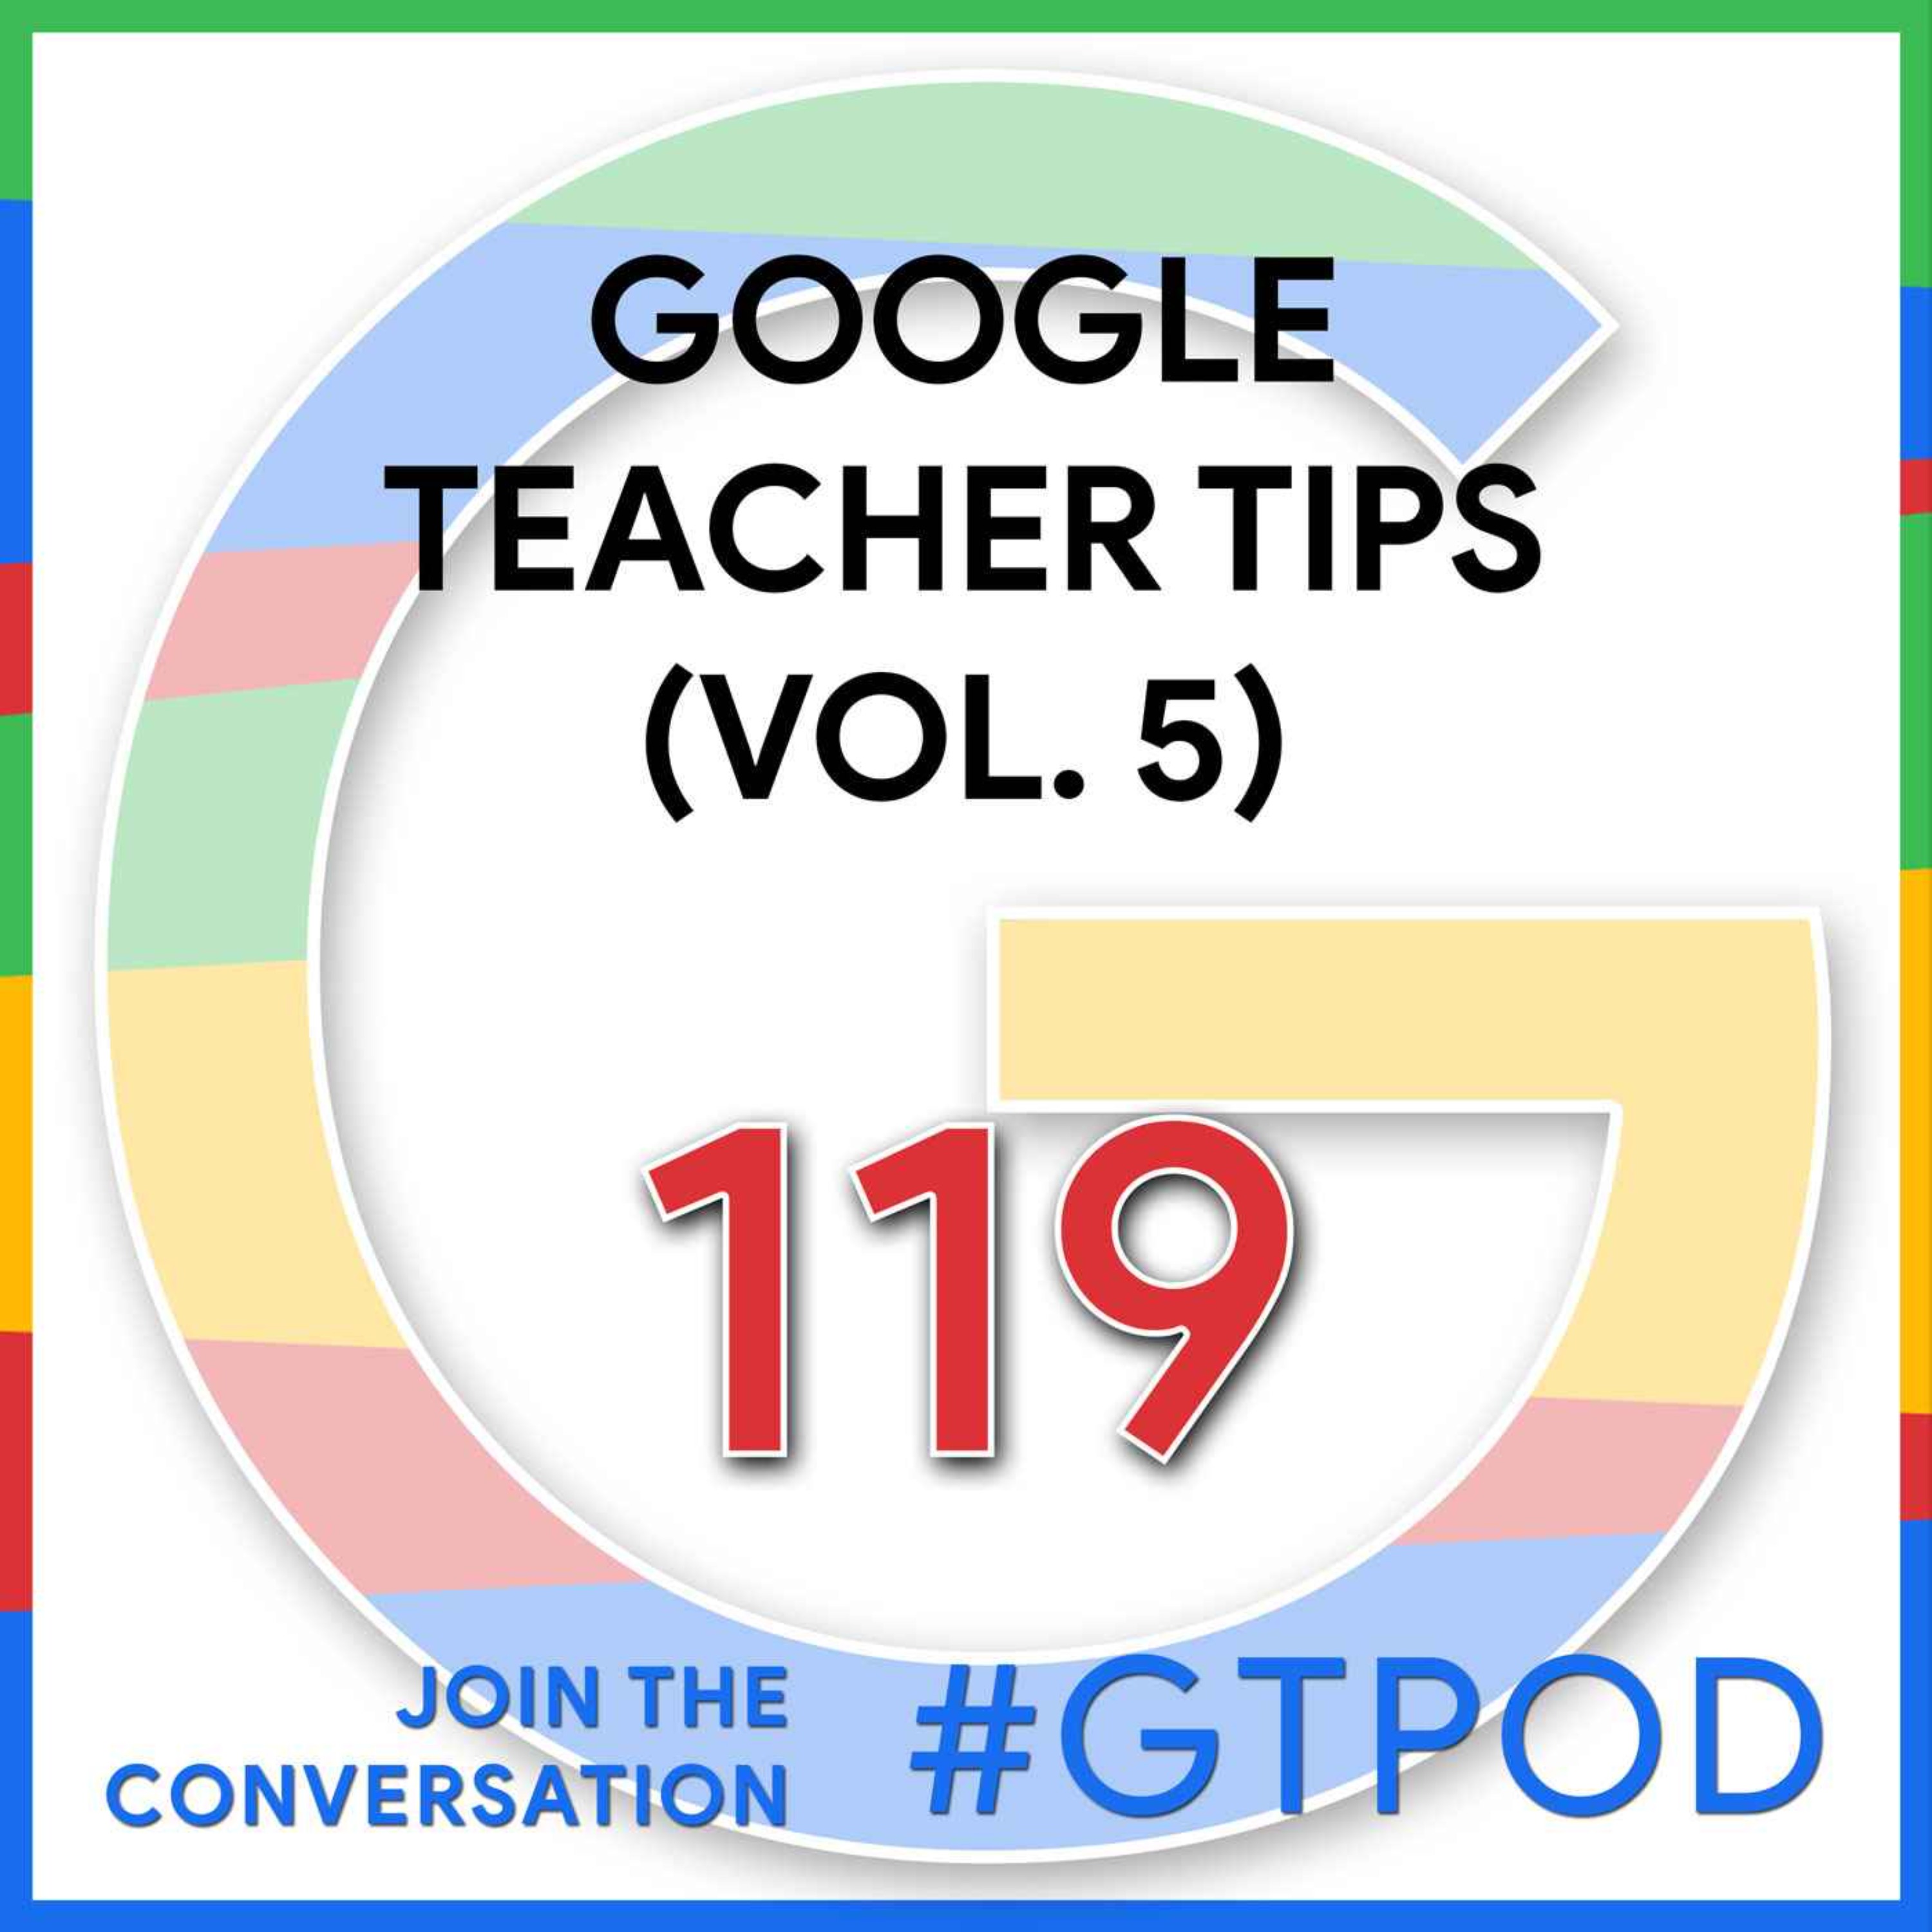 Google Teacher Tips (Vol. 5) - GTP119